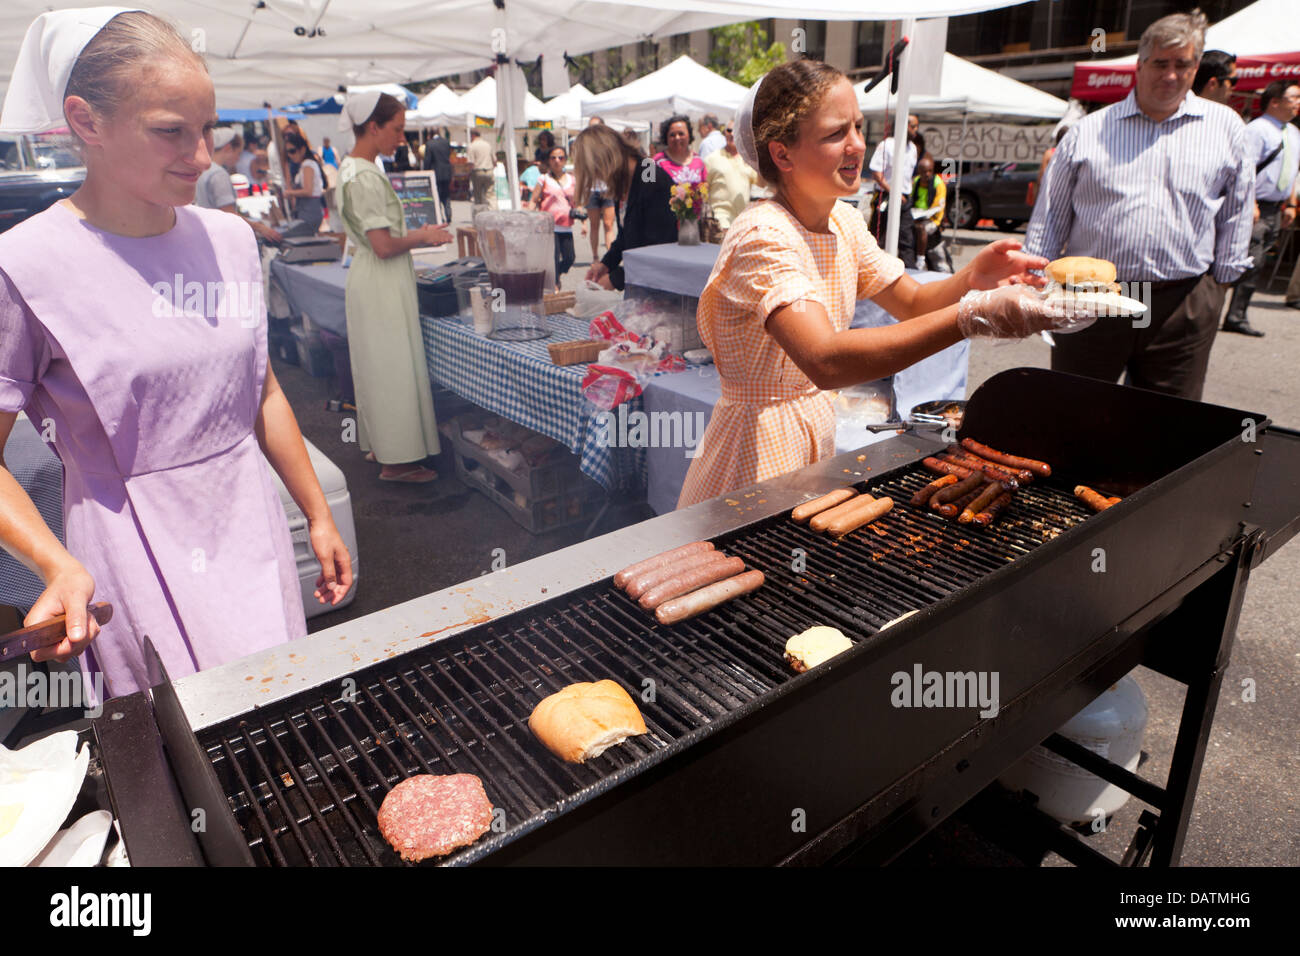 Amish girls selling hamburgers and hot dogs at farmers market - Washington, DC USA Stock Photo